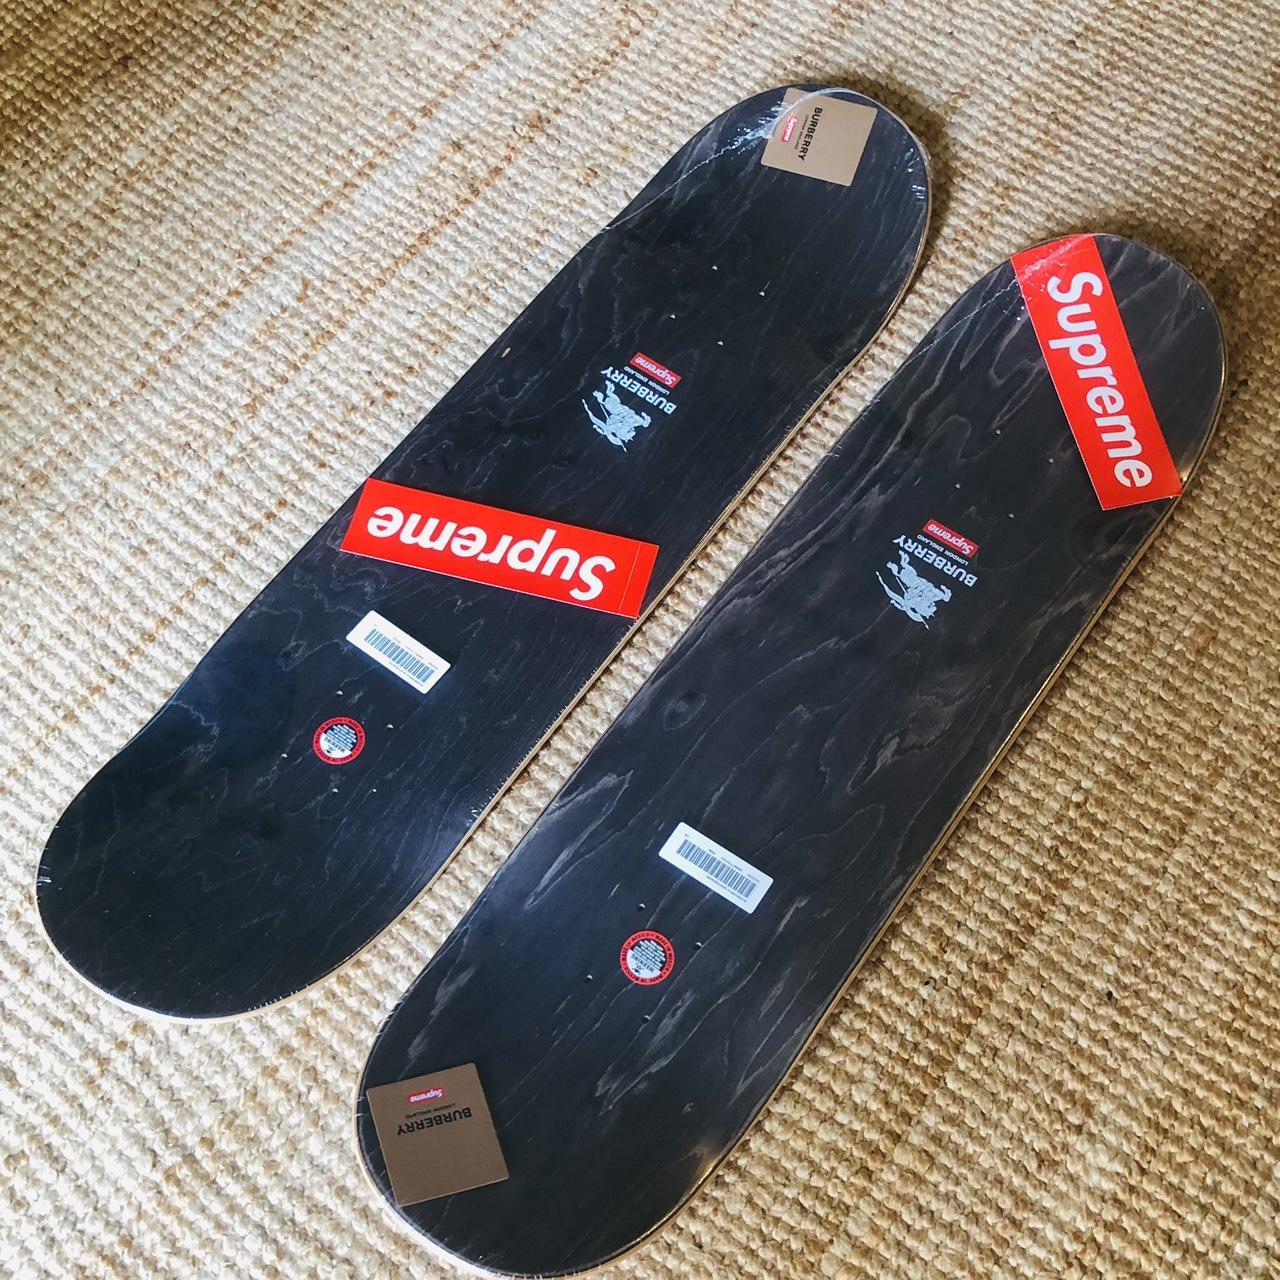 Supreme Burberry Skateboard Deck Set / Brand New /... - Depop